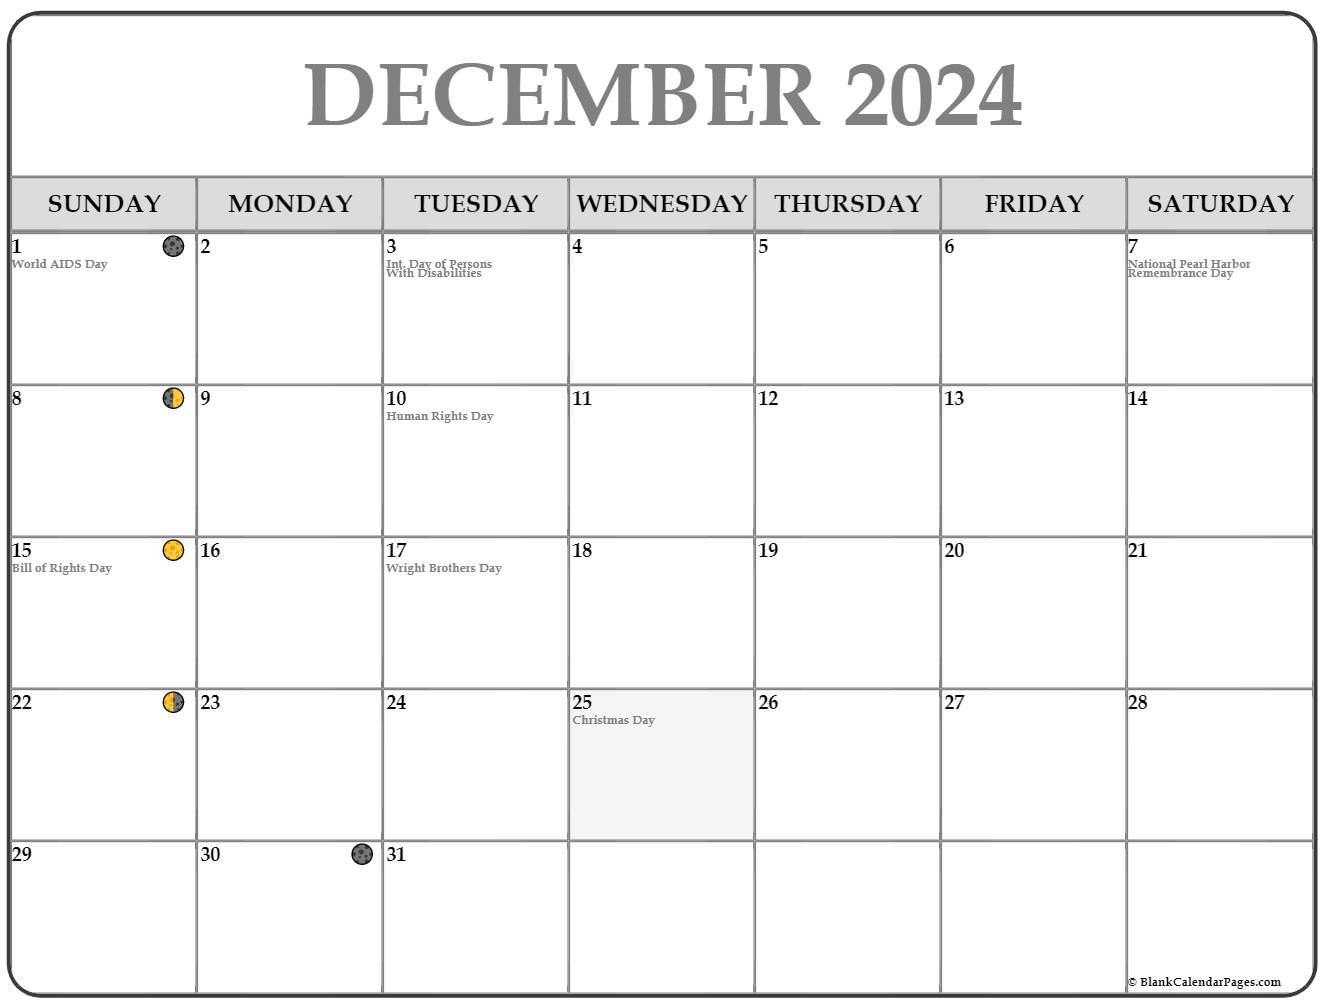 December 2021 calendar | 56+ templates of 2021 printable ...